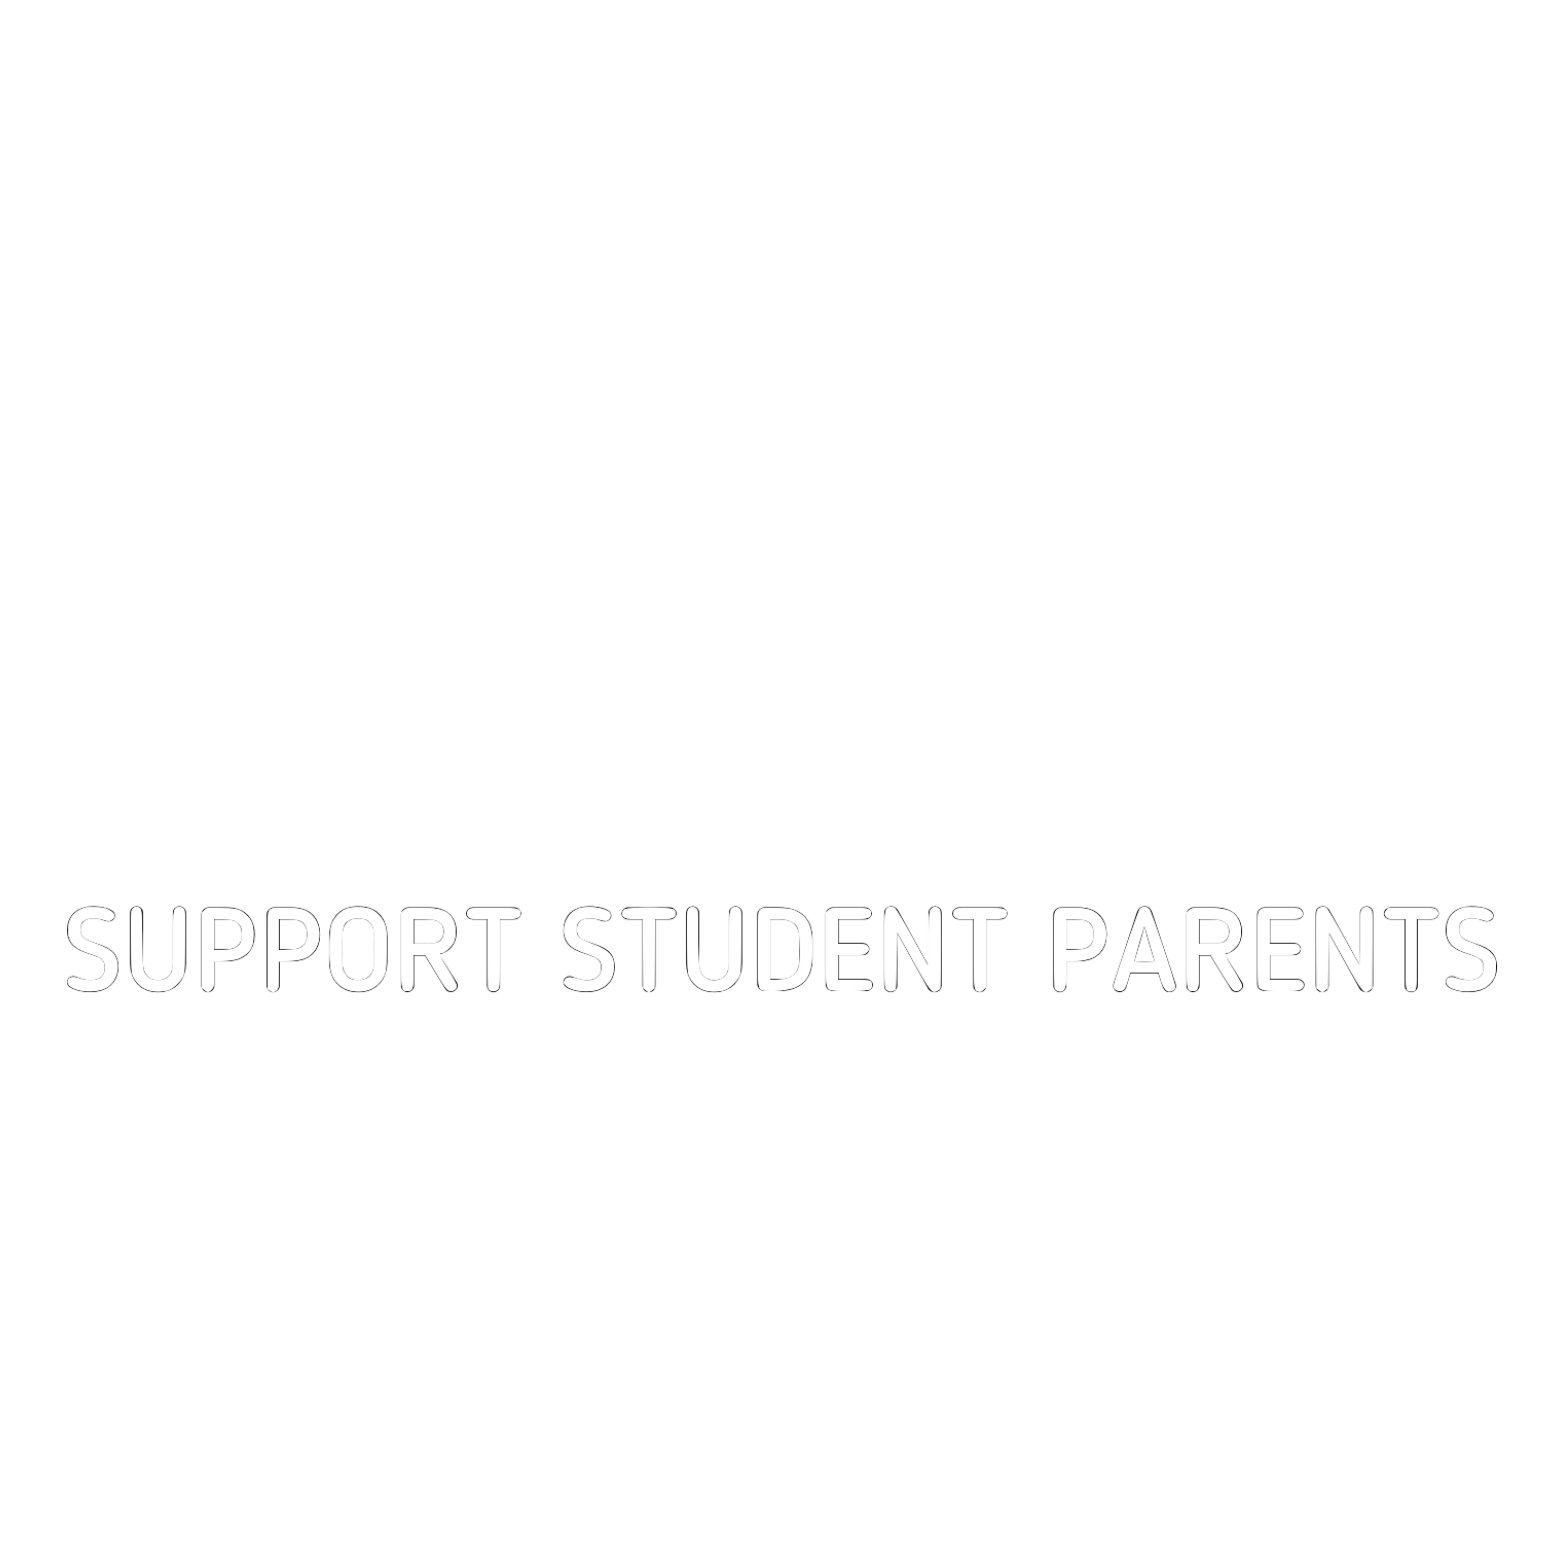 Support Student Parents logo 23